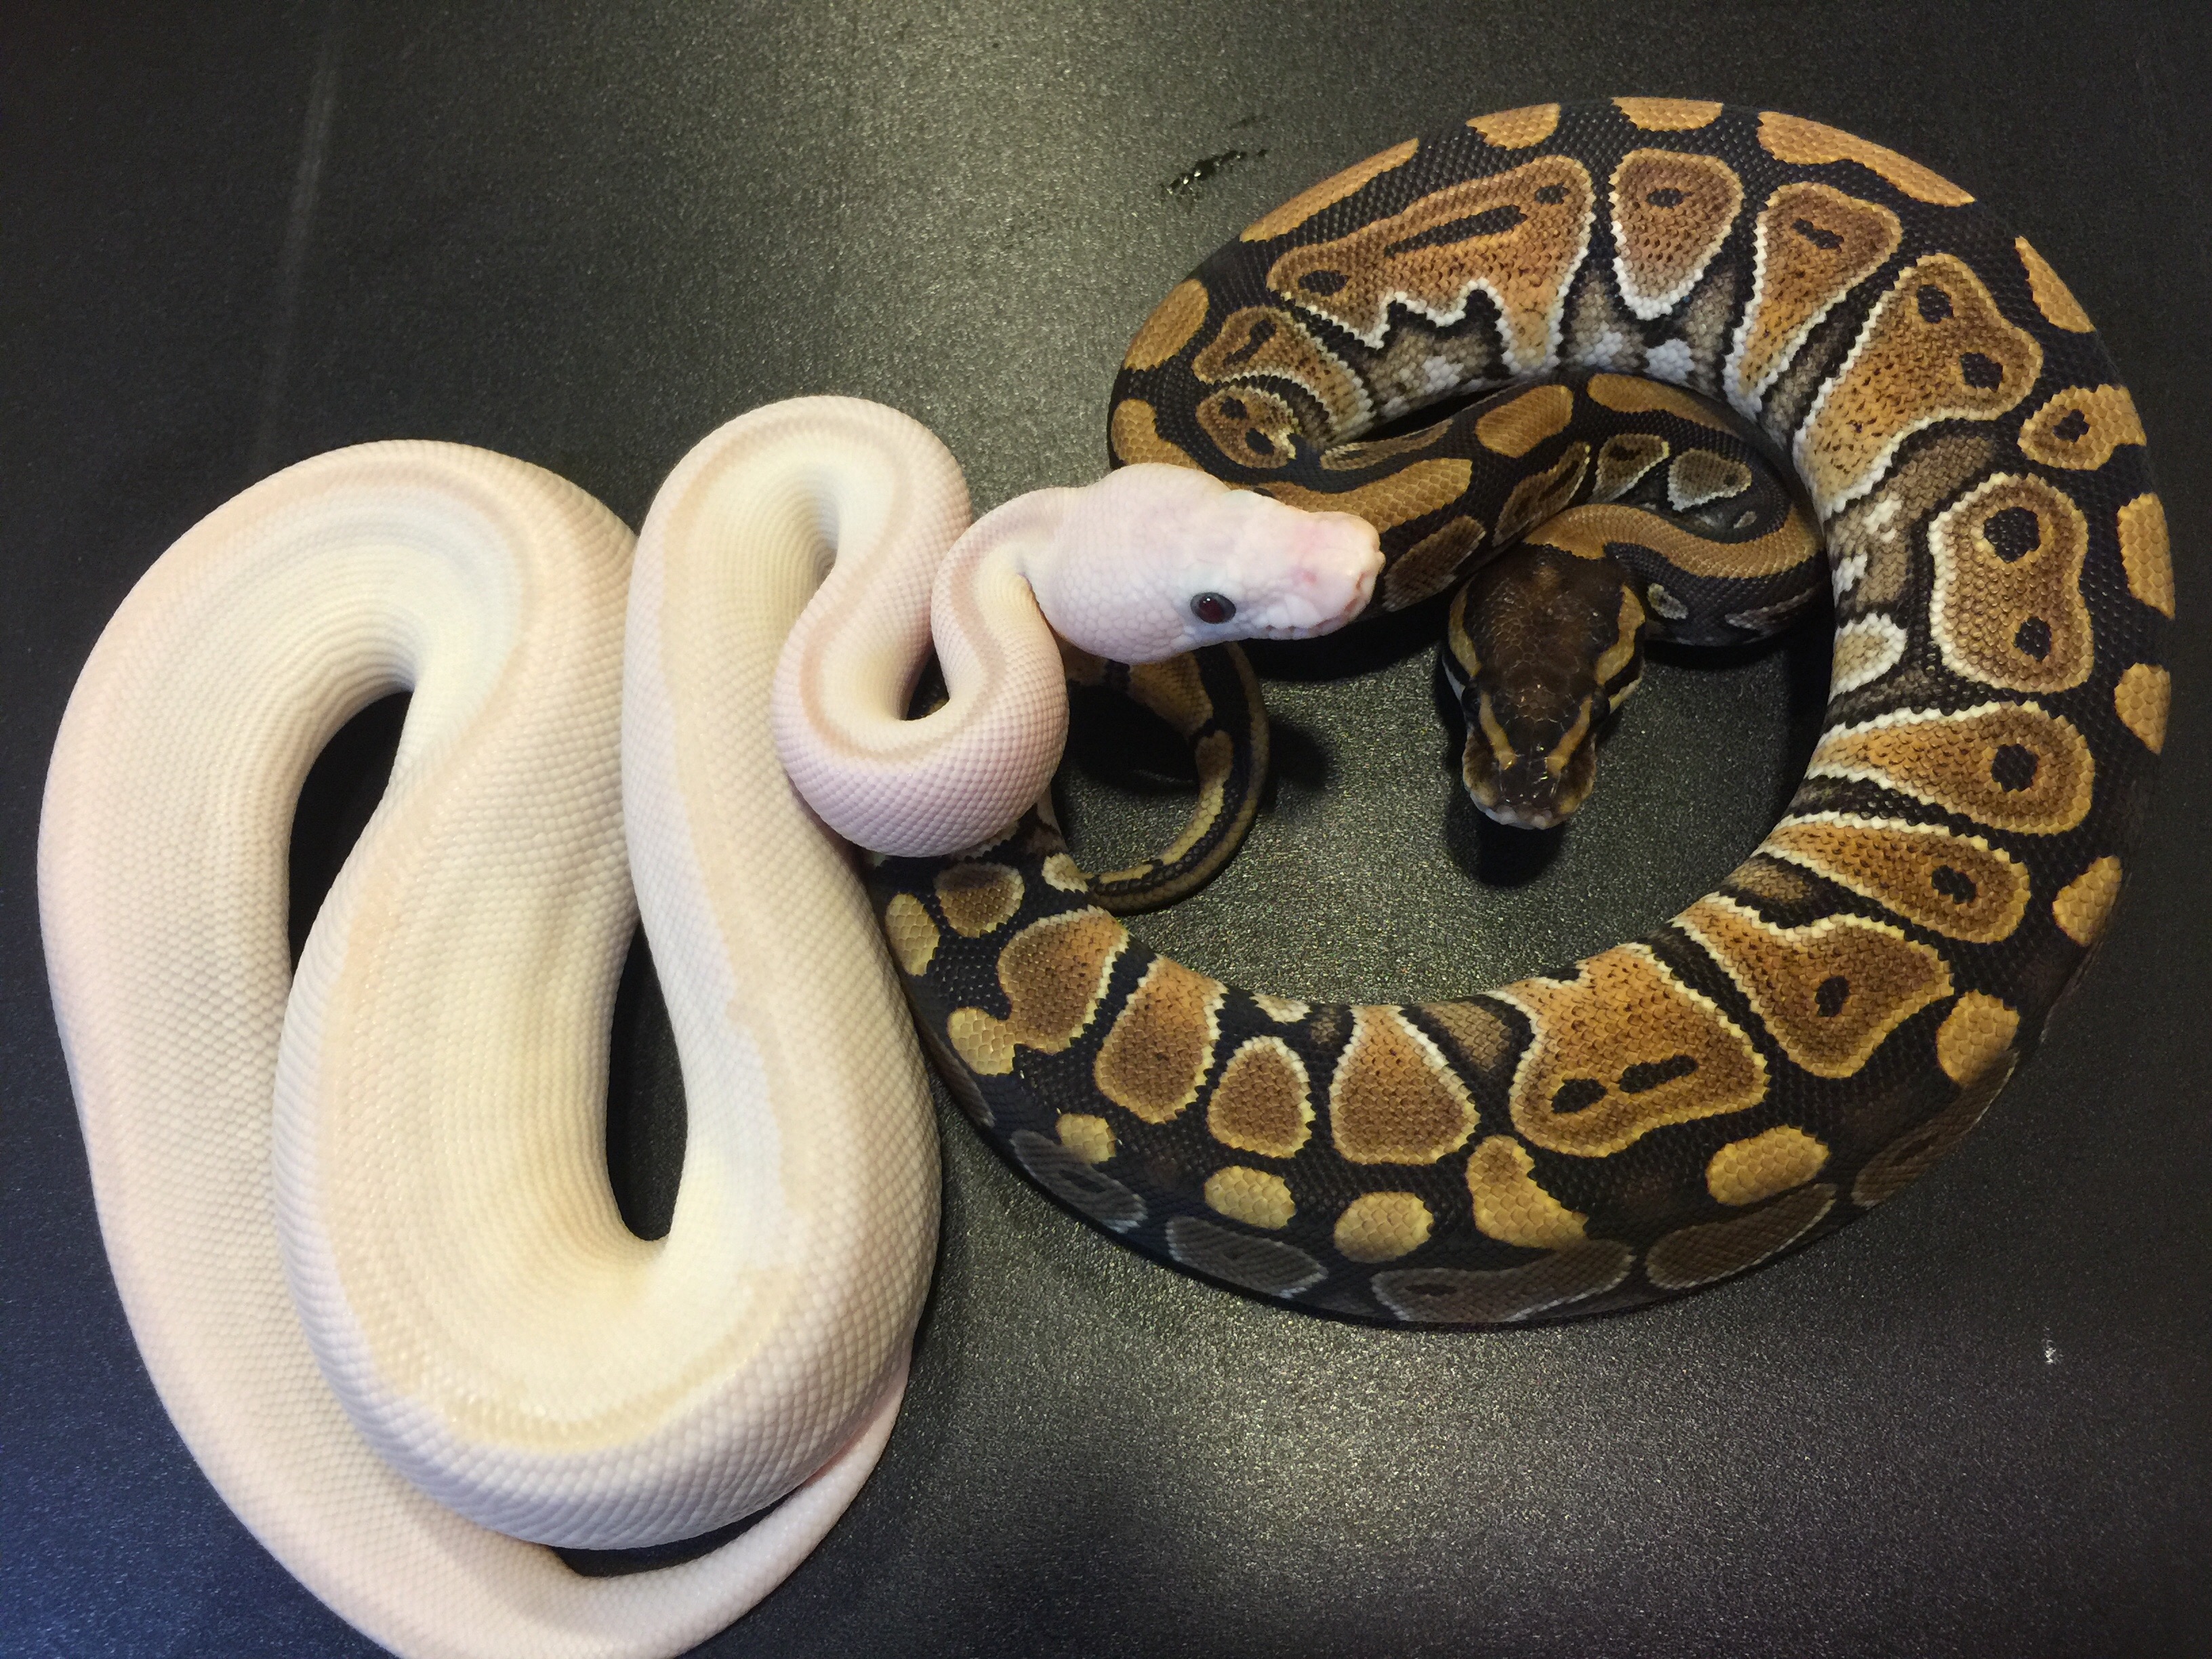 White Diamond Ball Python by Nicebalz Snakes